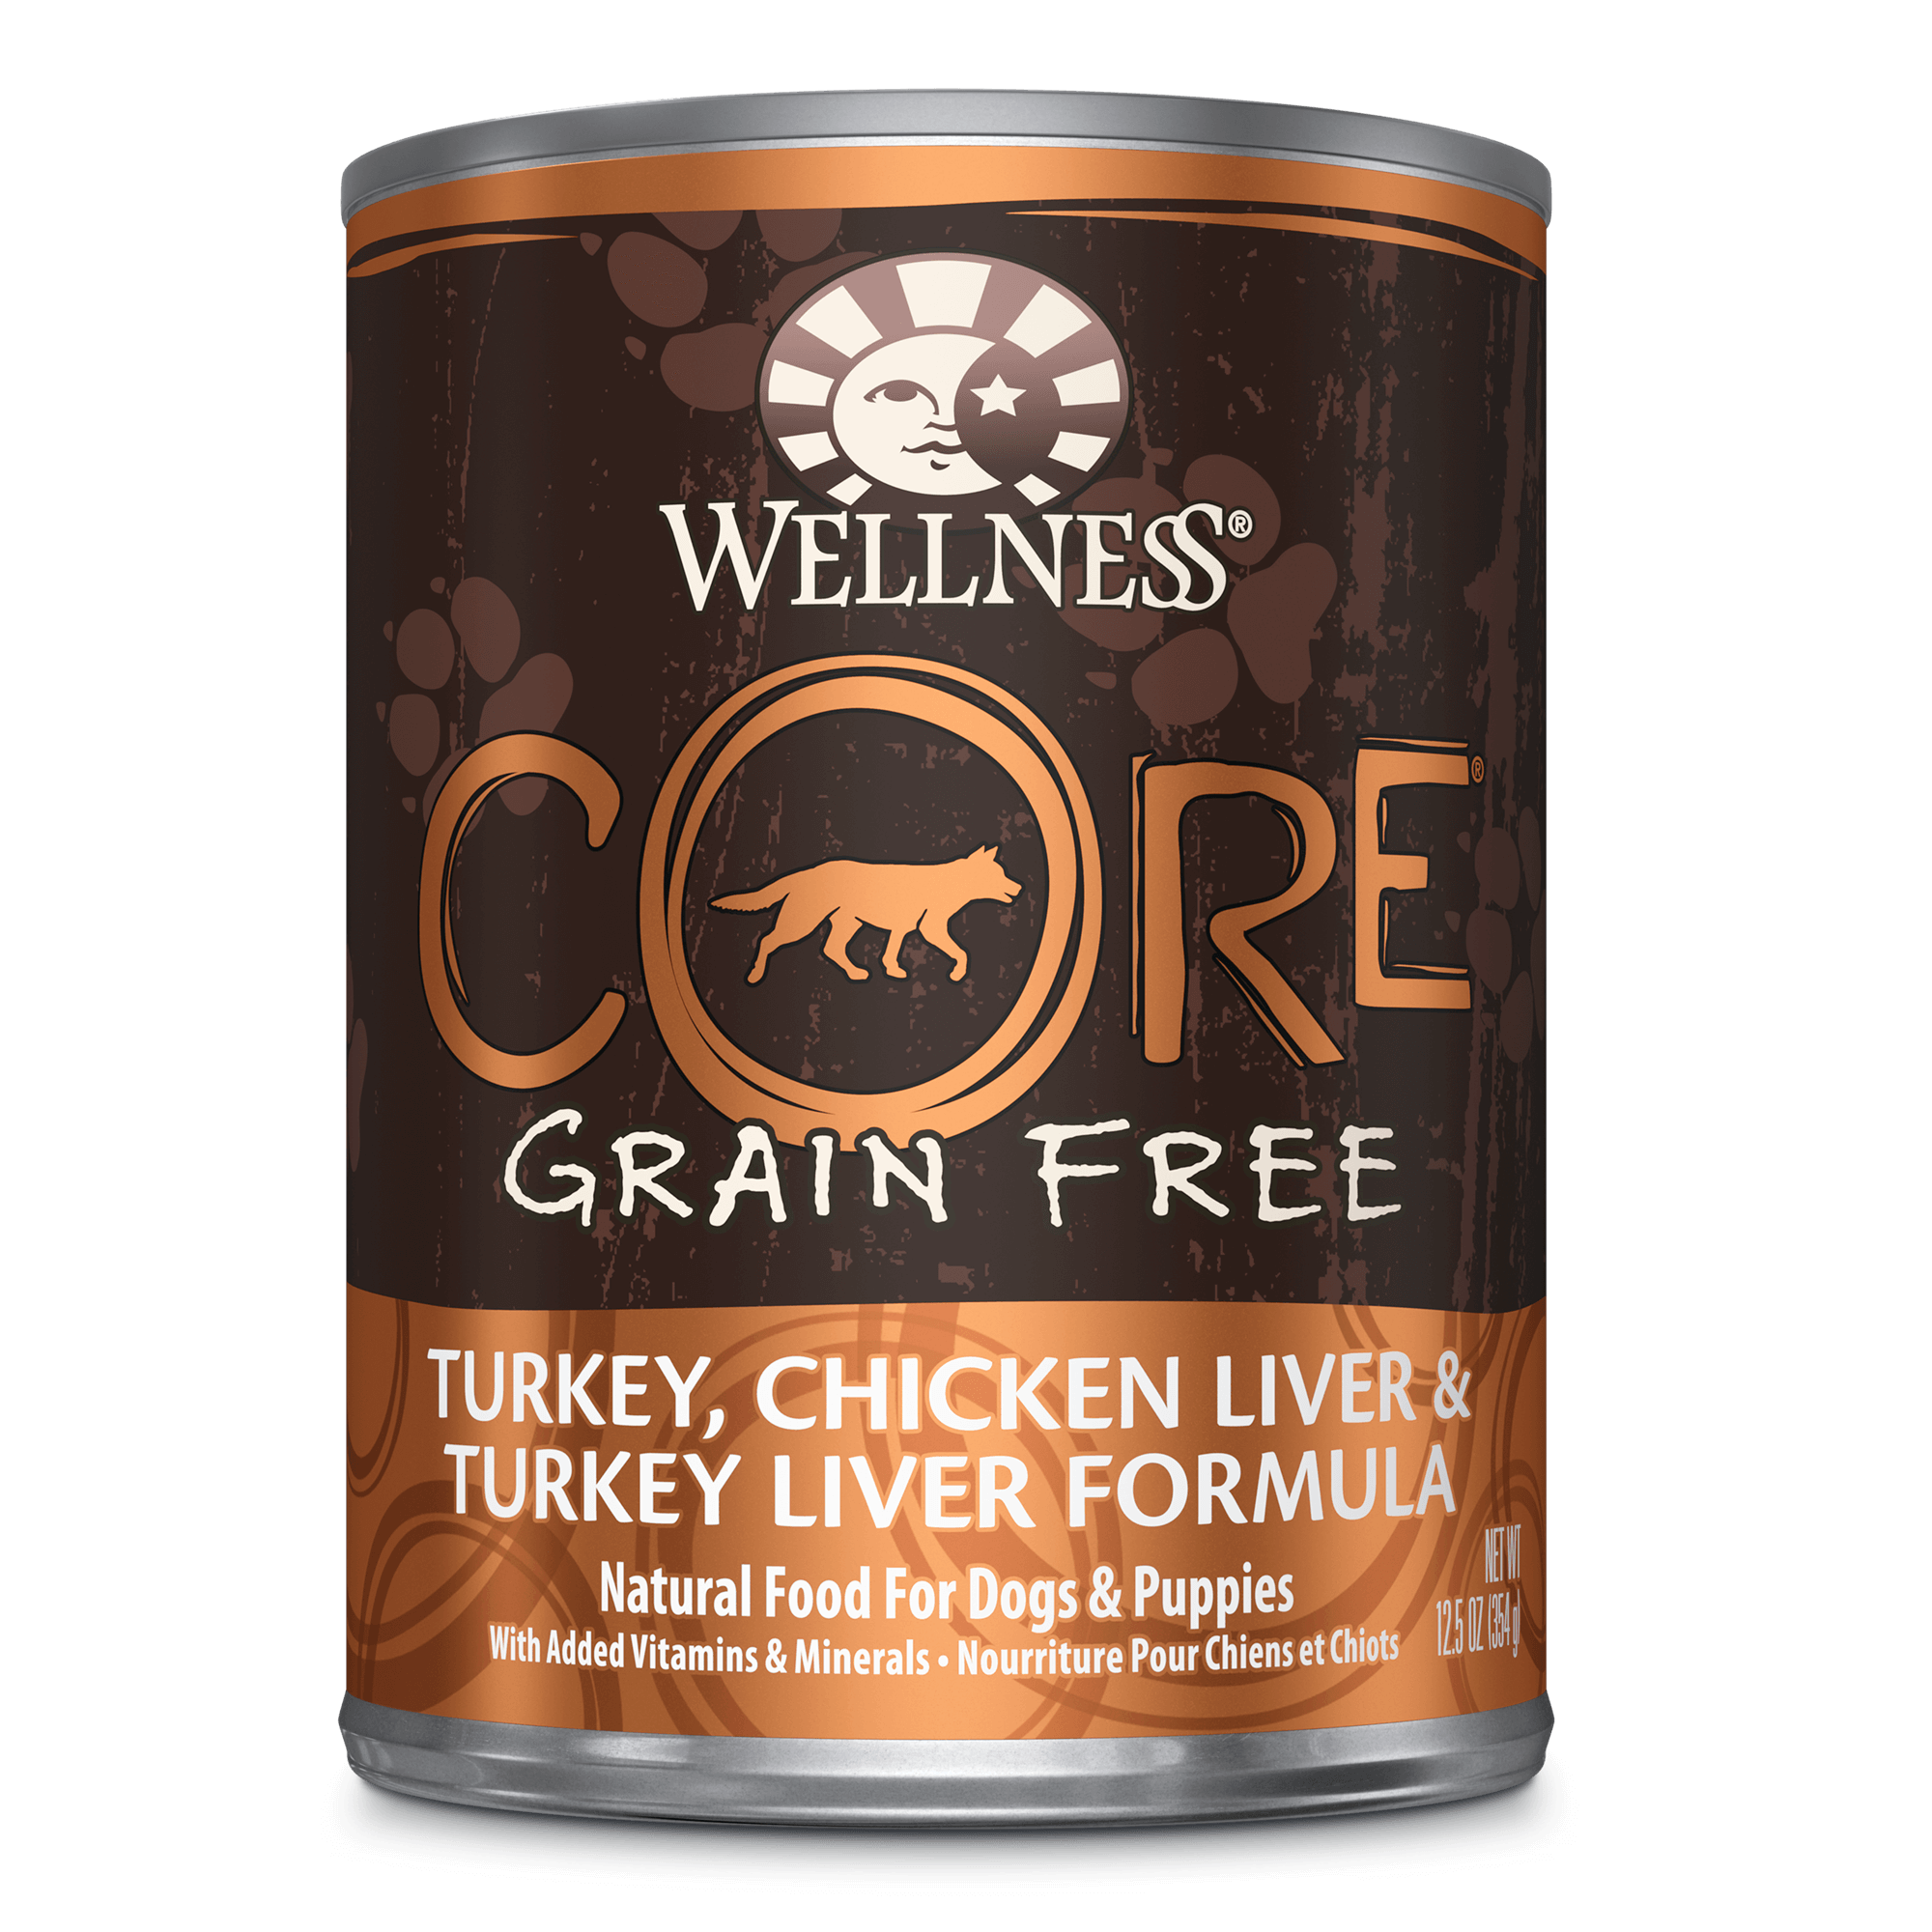 CORE Turkey, Chicken Liver & Turkey Liver Wellness Pet Food Singapore